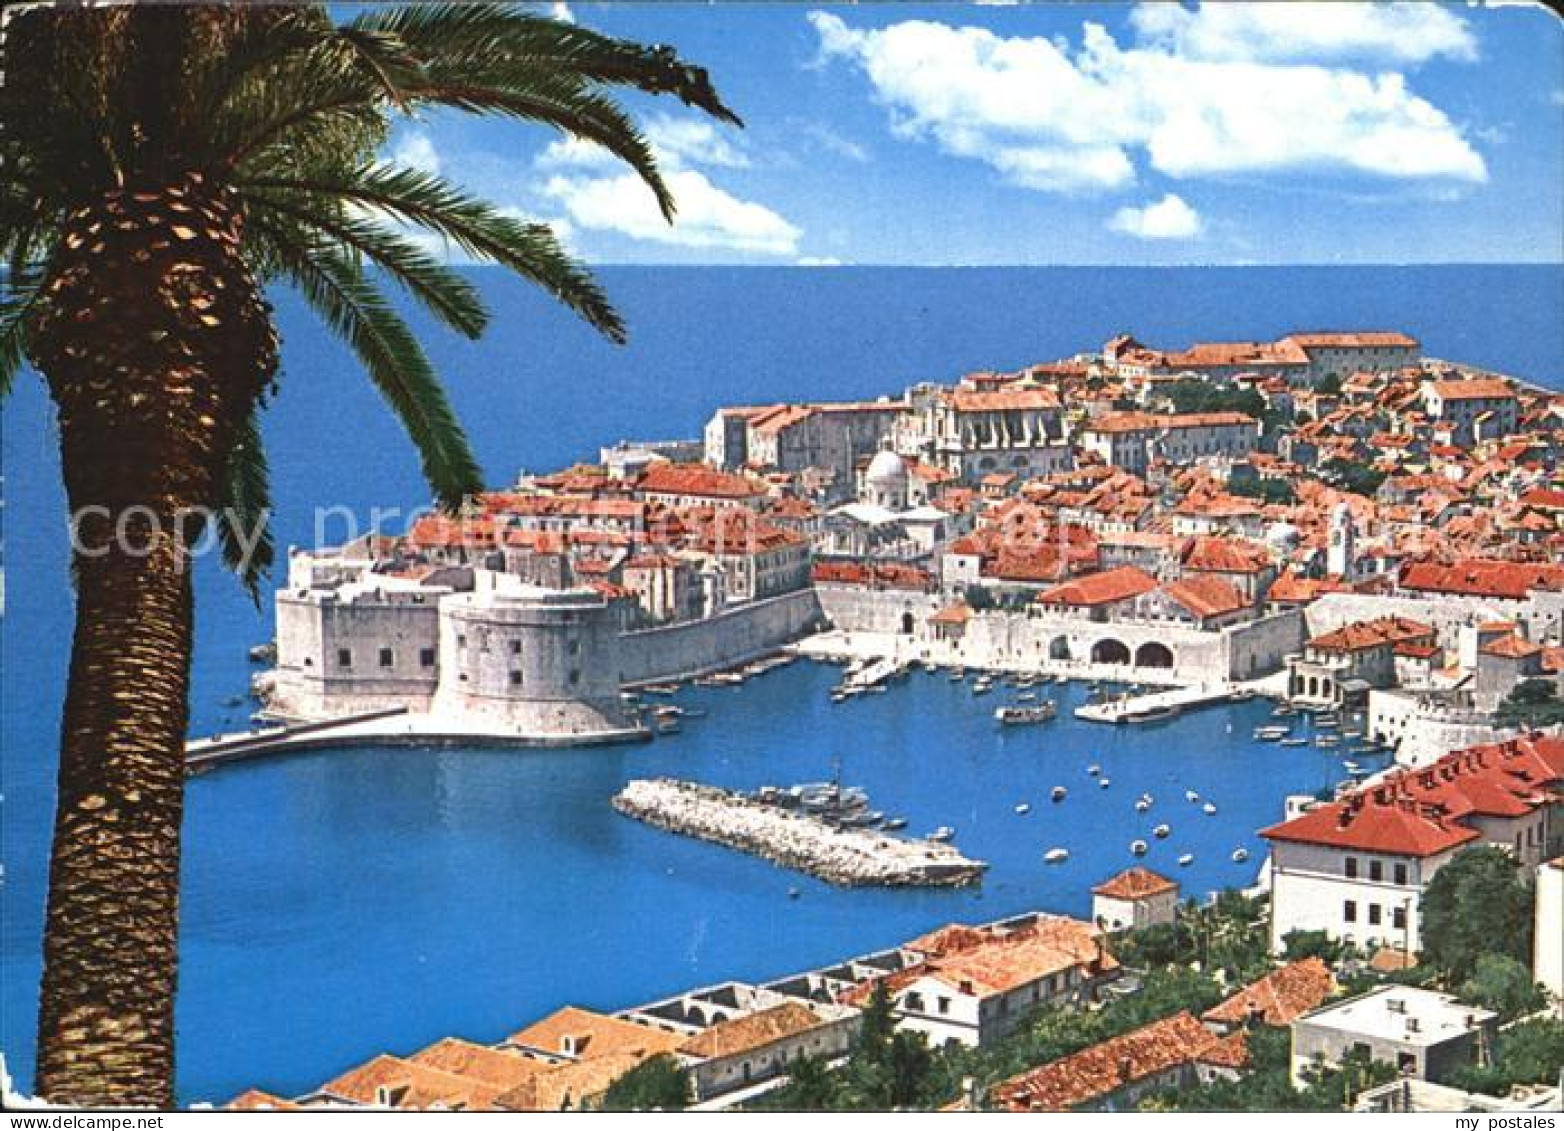 72564552 Dubrovnik Ragusa Panorama Croatia - Croatia